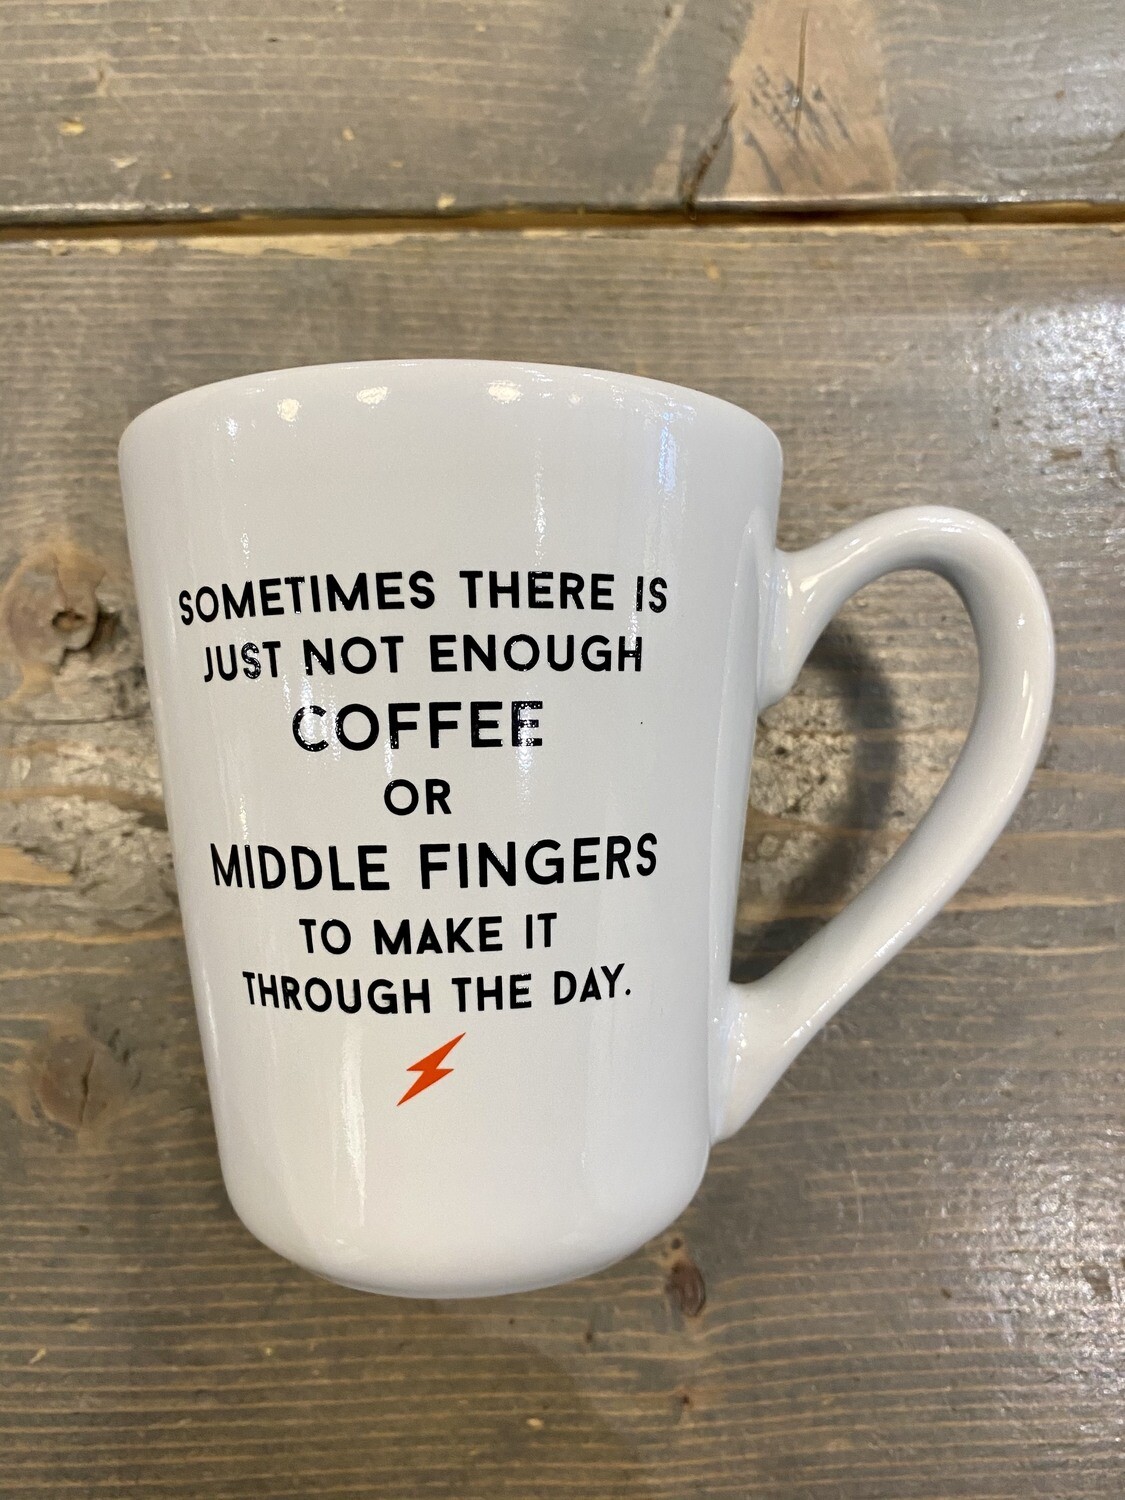 Not Enough Middle Fingers Mug